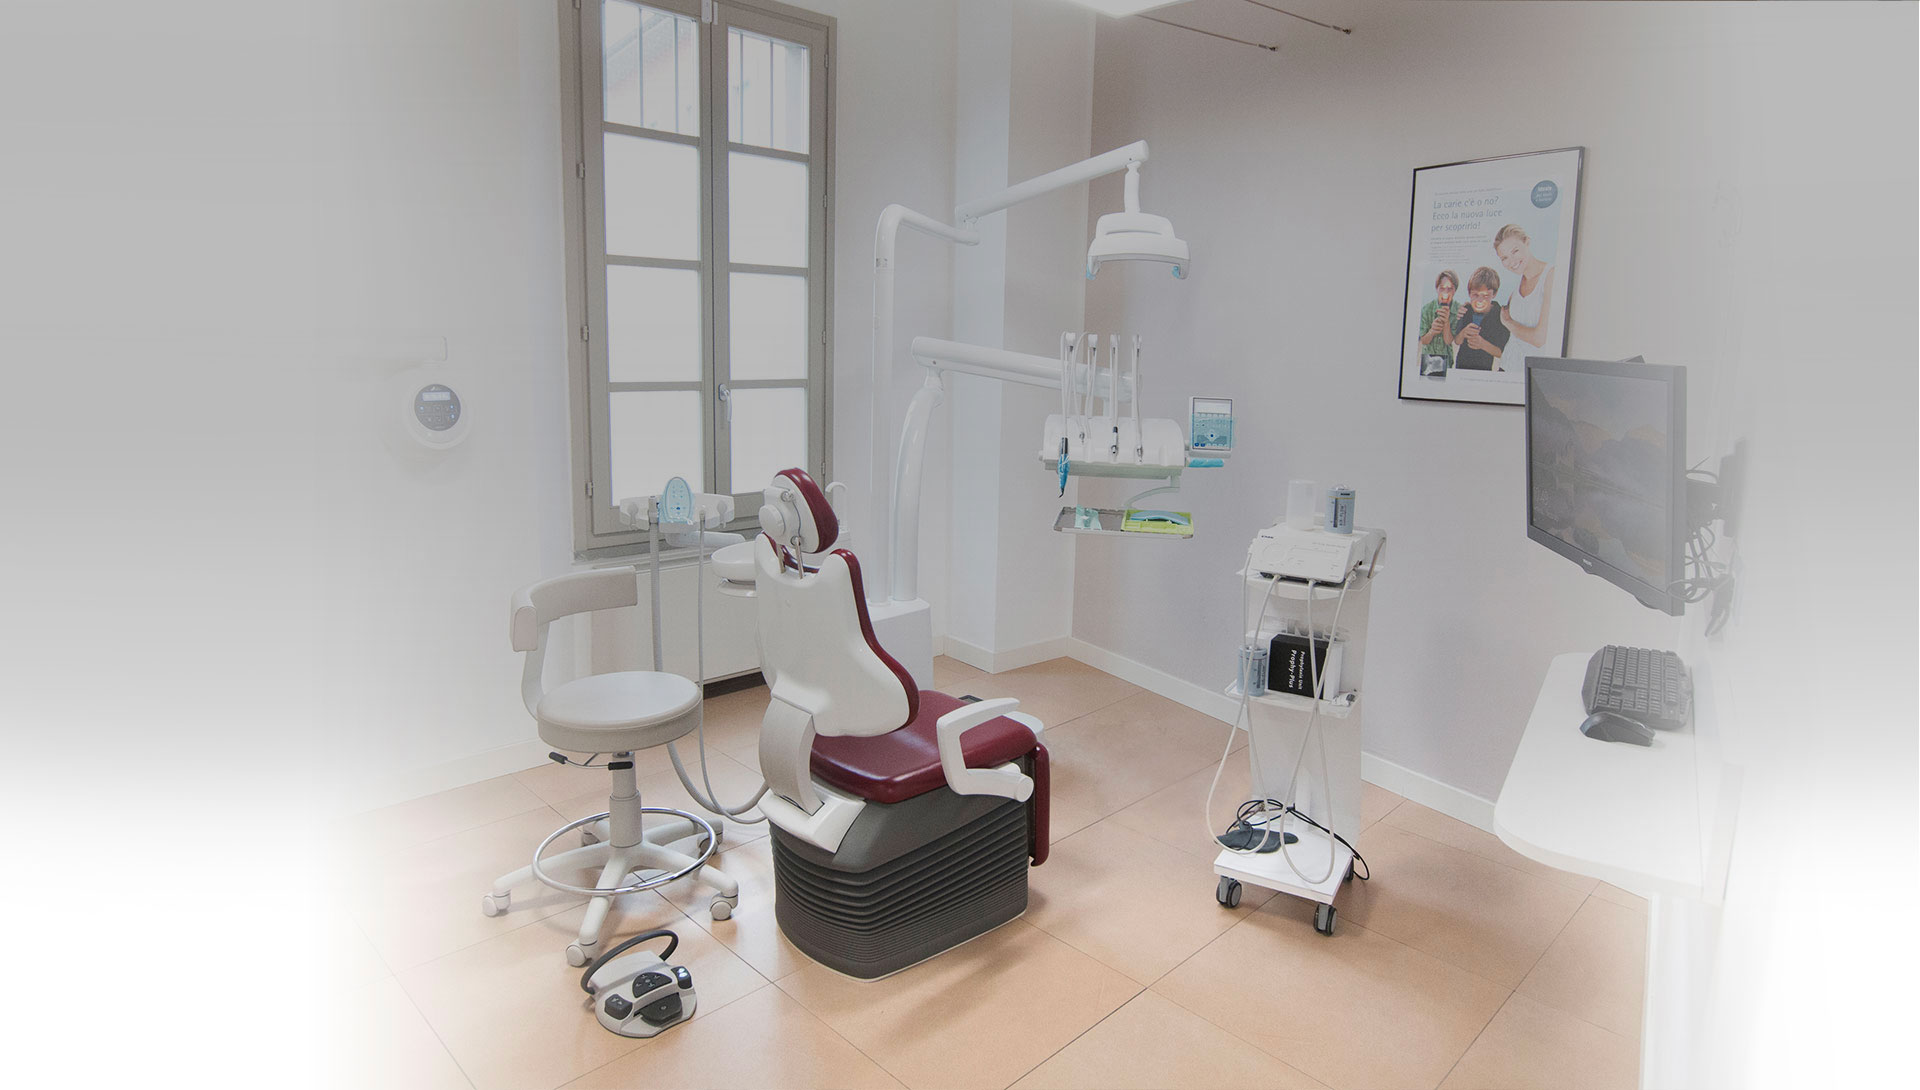 Apribocca Optagrate - Studio Odontoiatrico Premadent